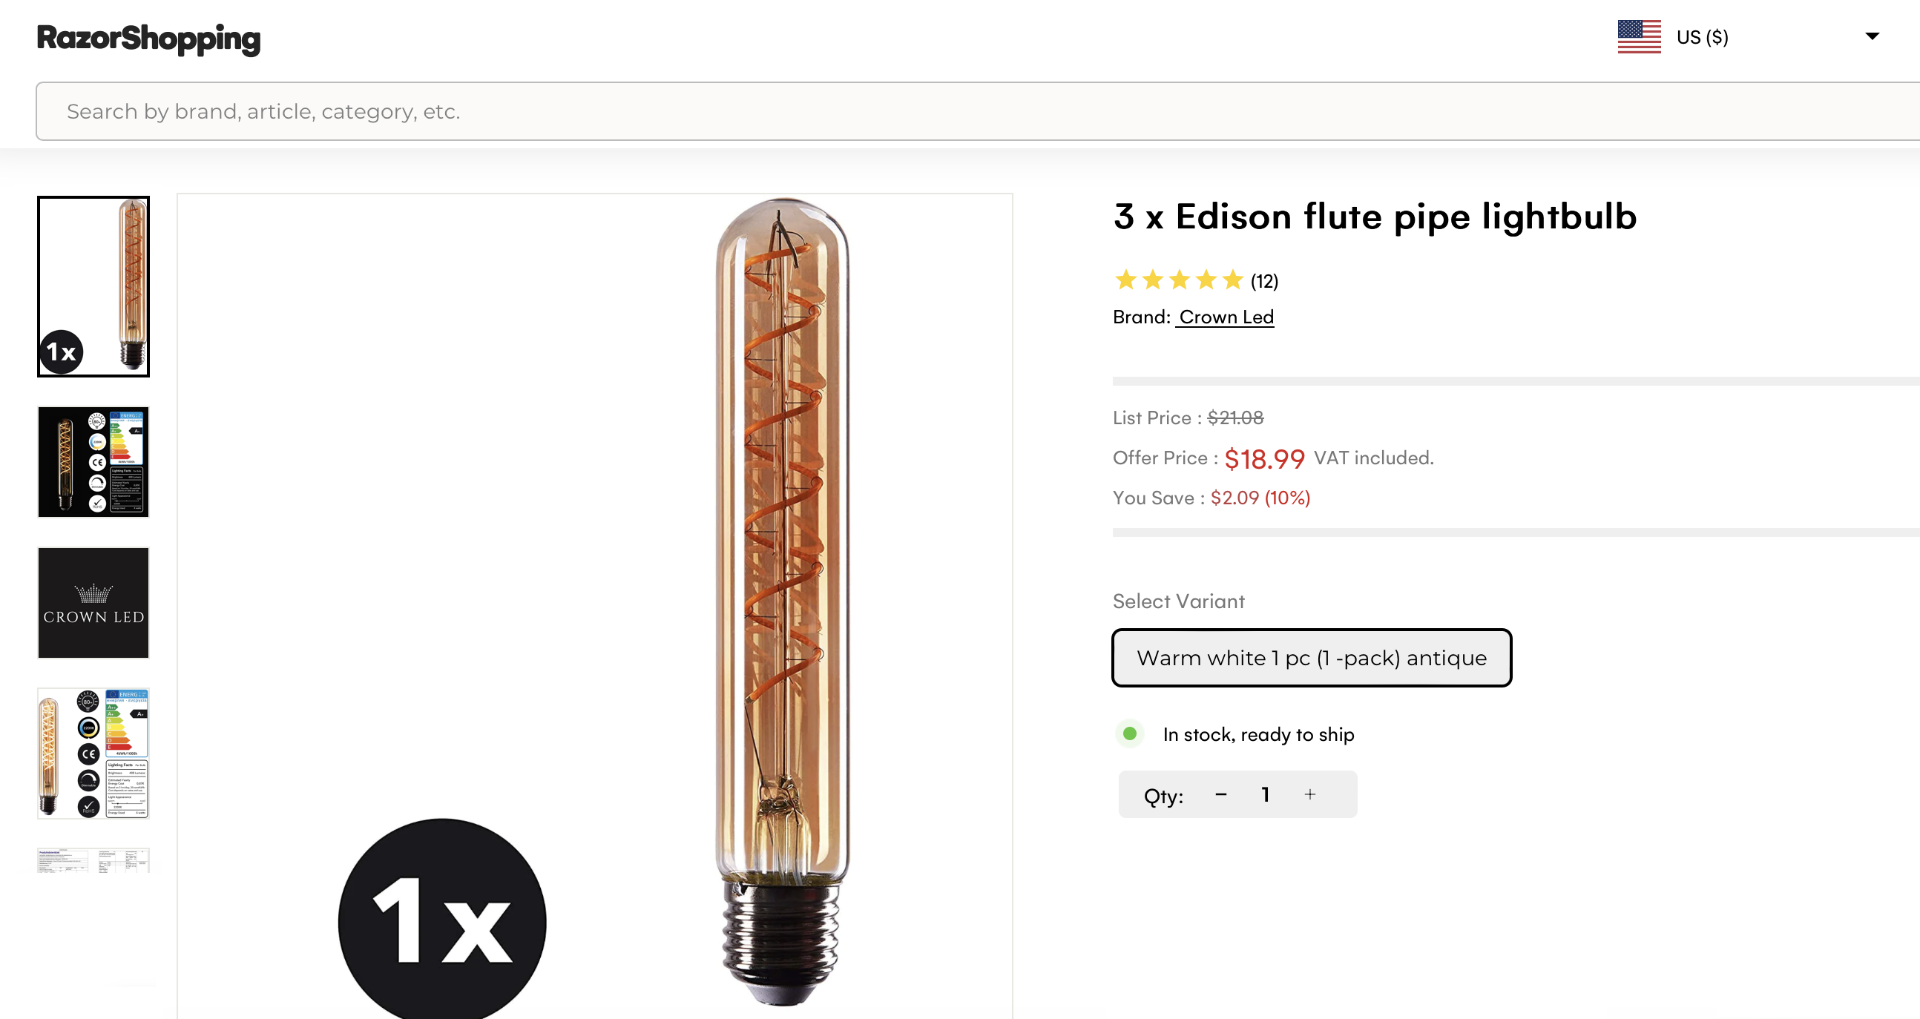 12 x CROWN LED Edison Flat Pipe Lightbulb 4W/40W Warm White - NEW & BOXED - BIG RRP! - Image 2 of 8